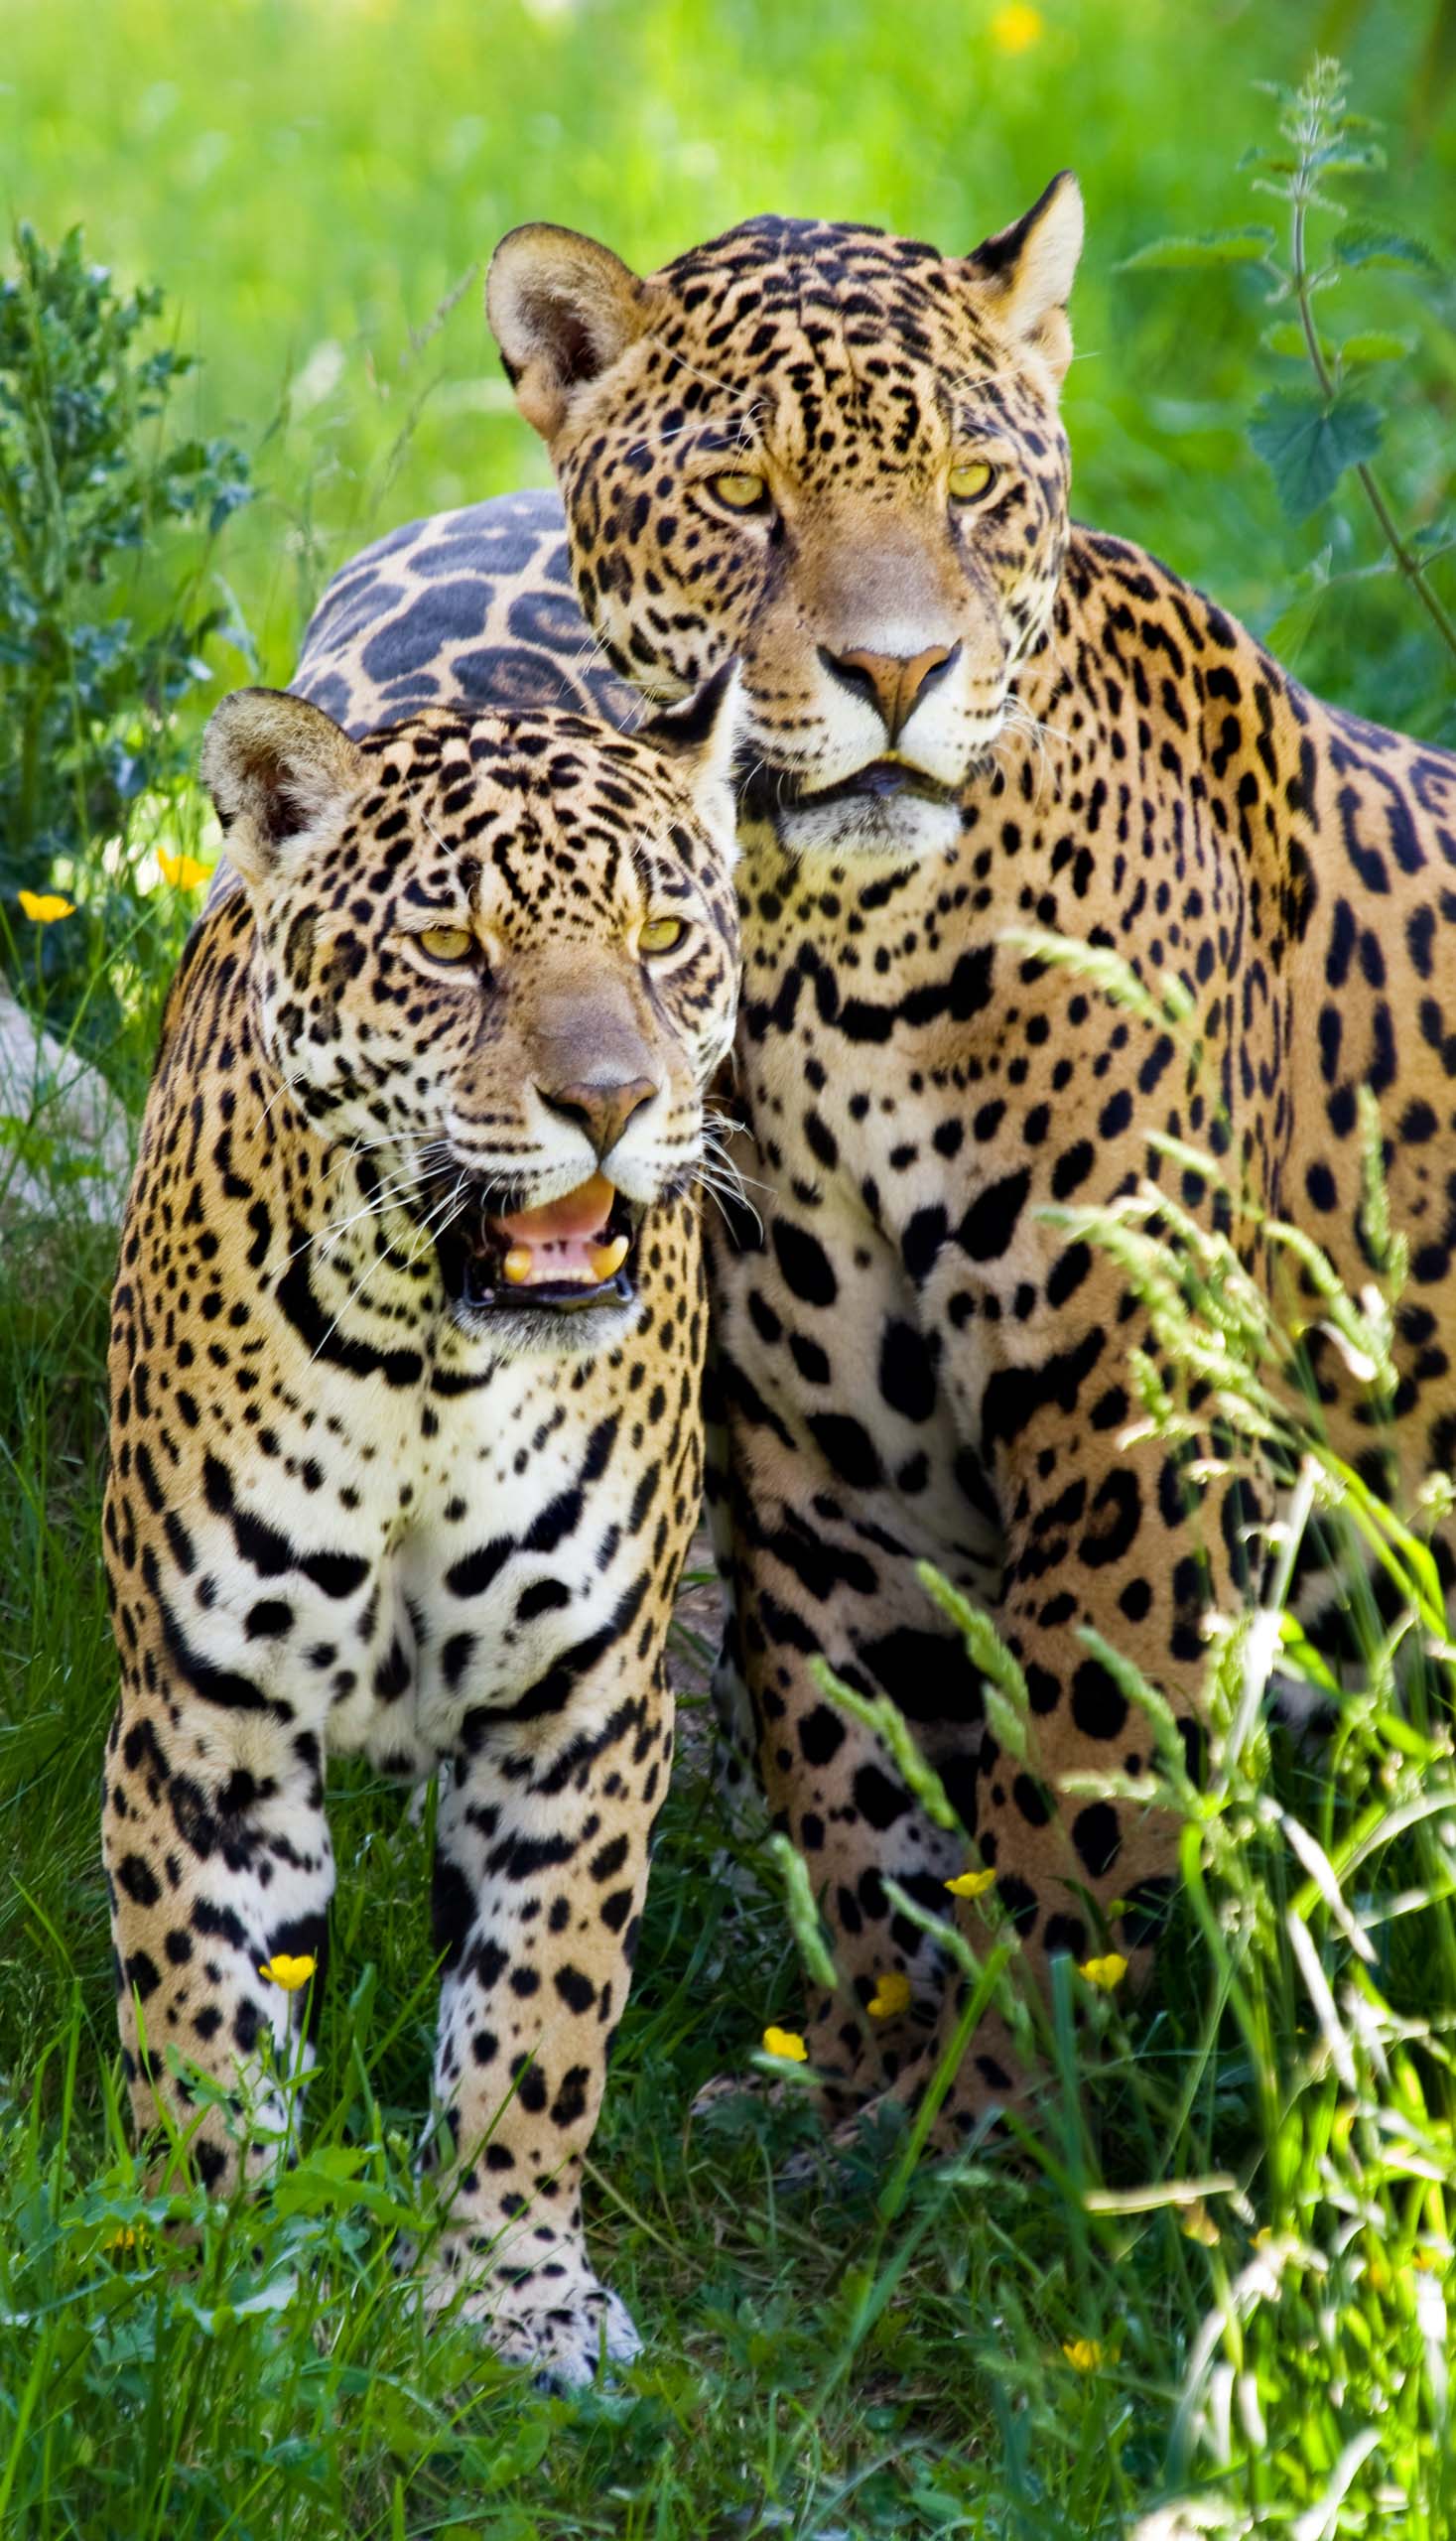 Two jaguars in the wild in Brazil.